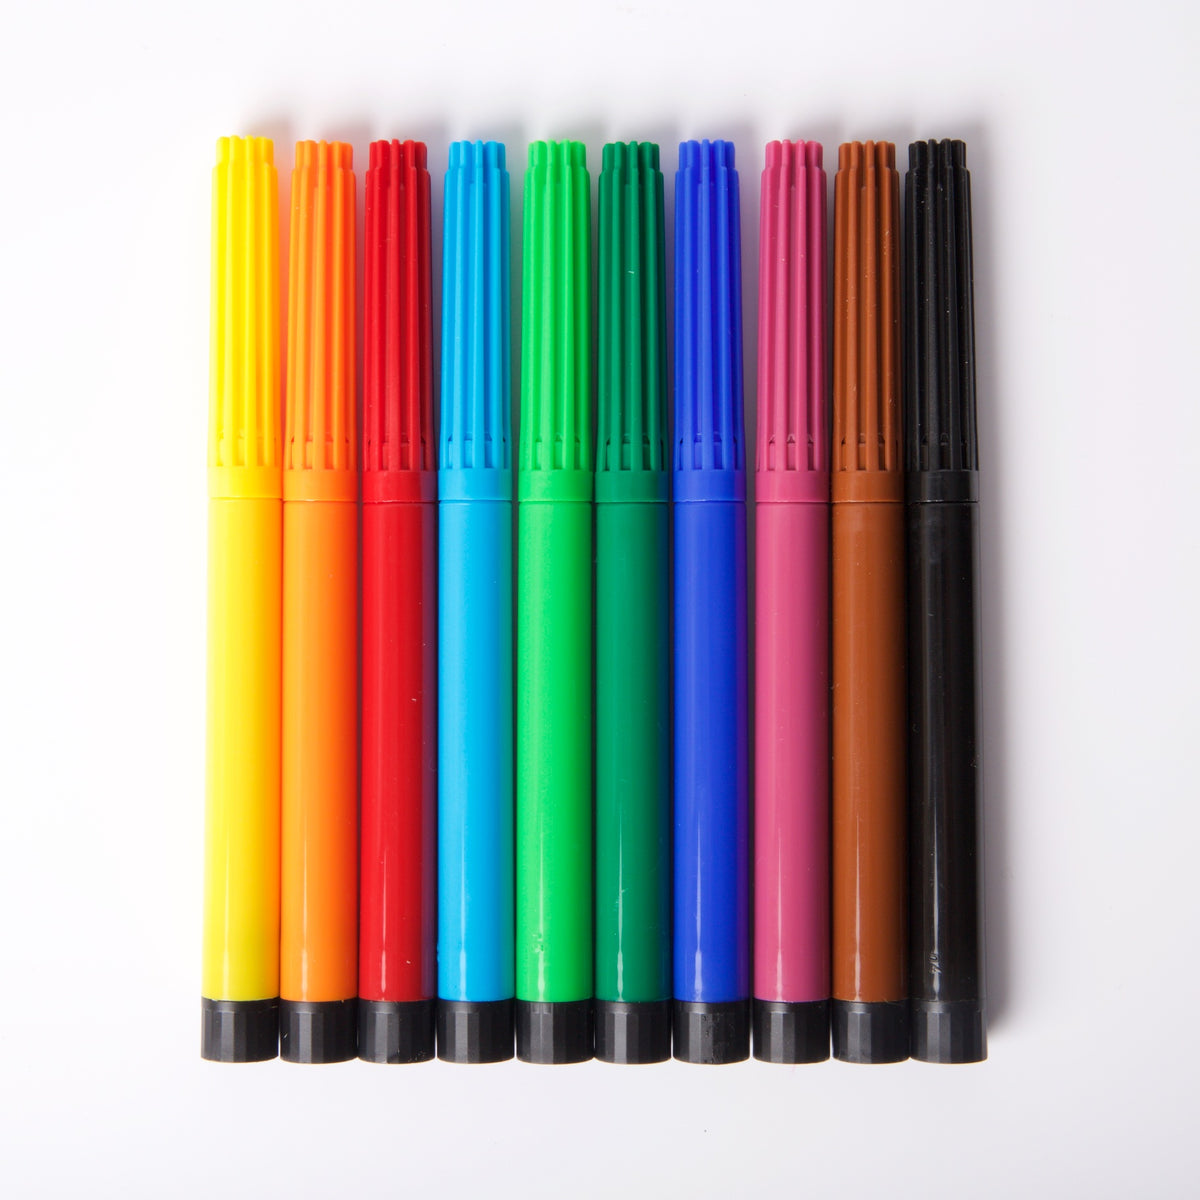  sunacme 35 Colors Felt Tip Pens, Premium Fine Point